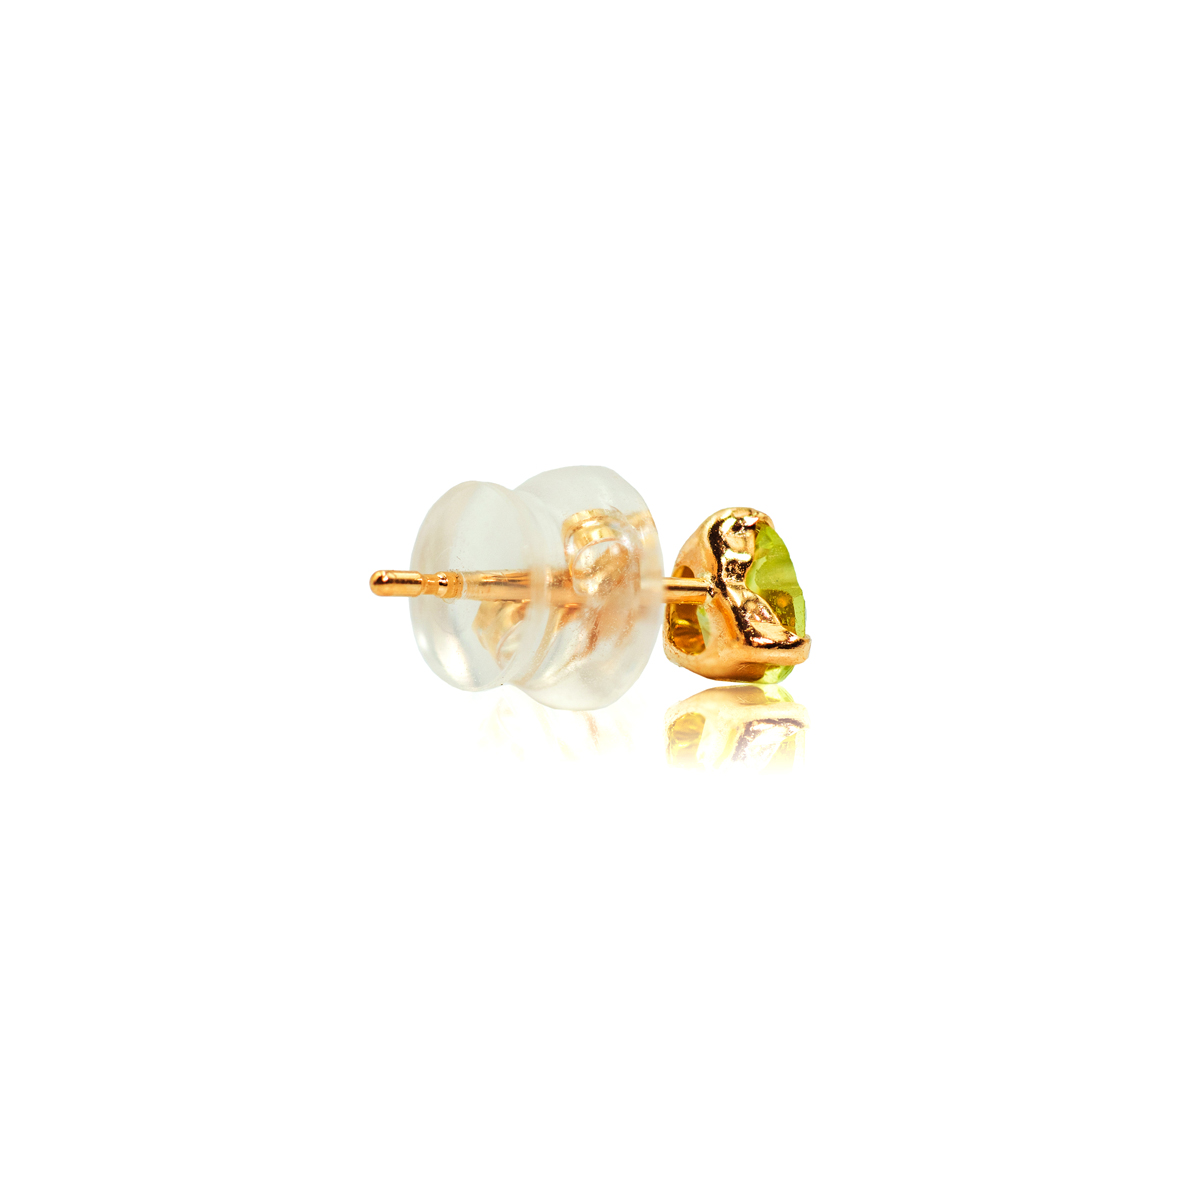 Heart Shaped Stud Earrings in 18k Yellow Gold with Peridot